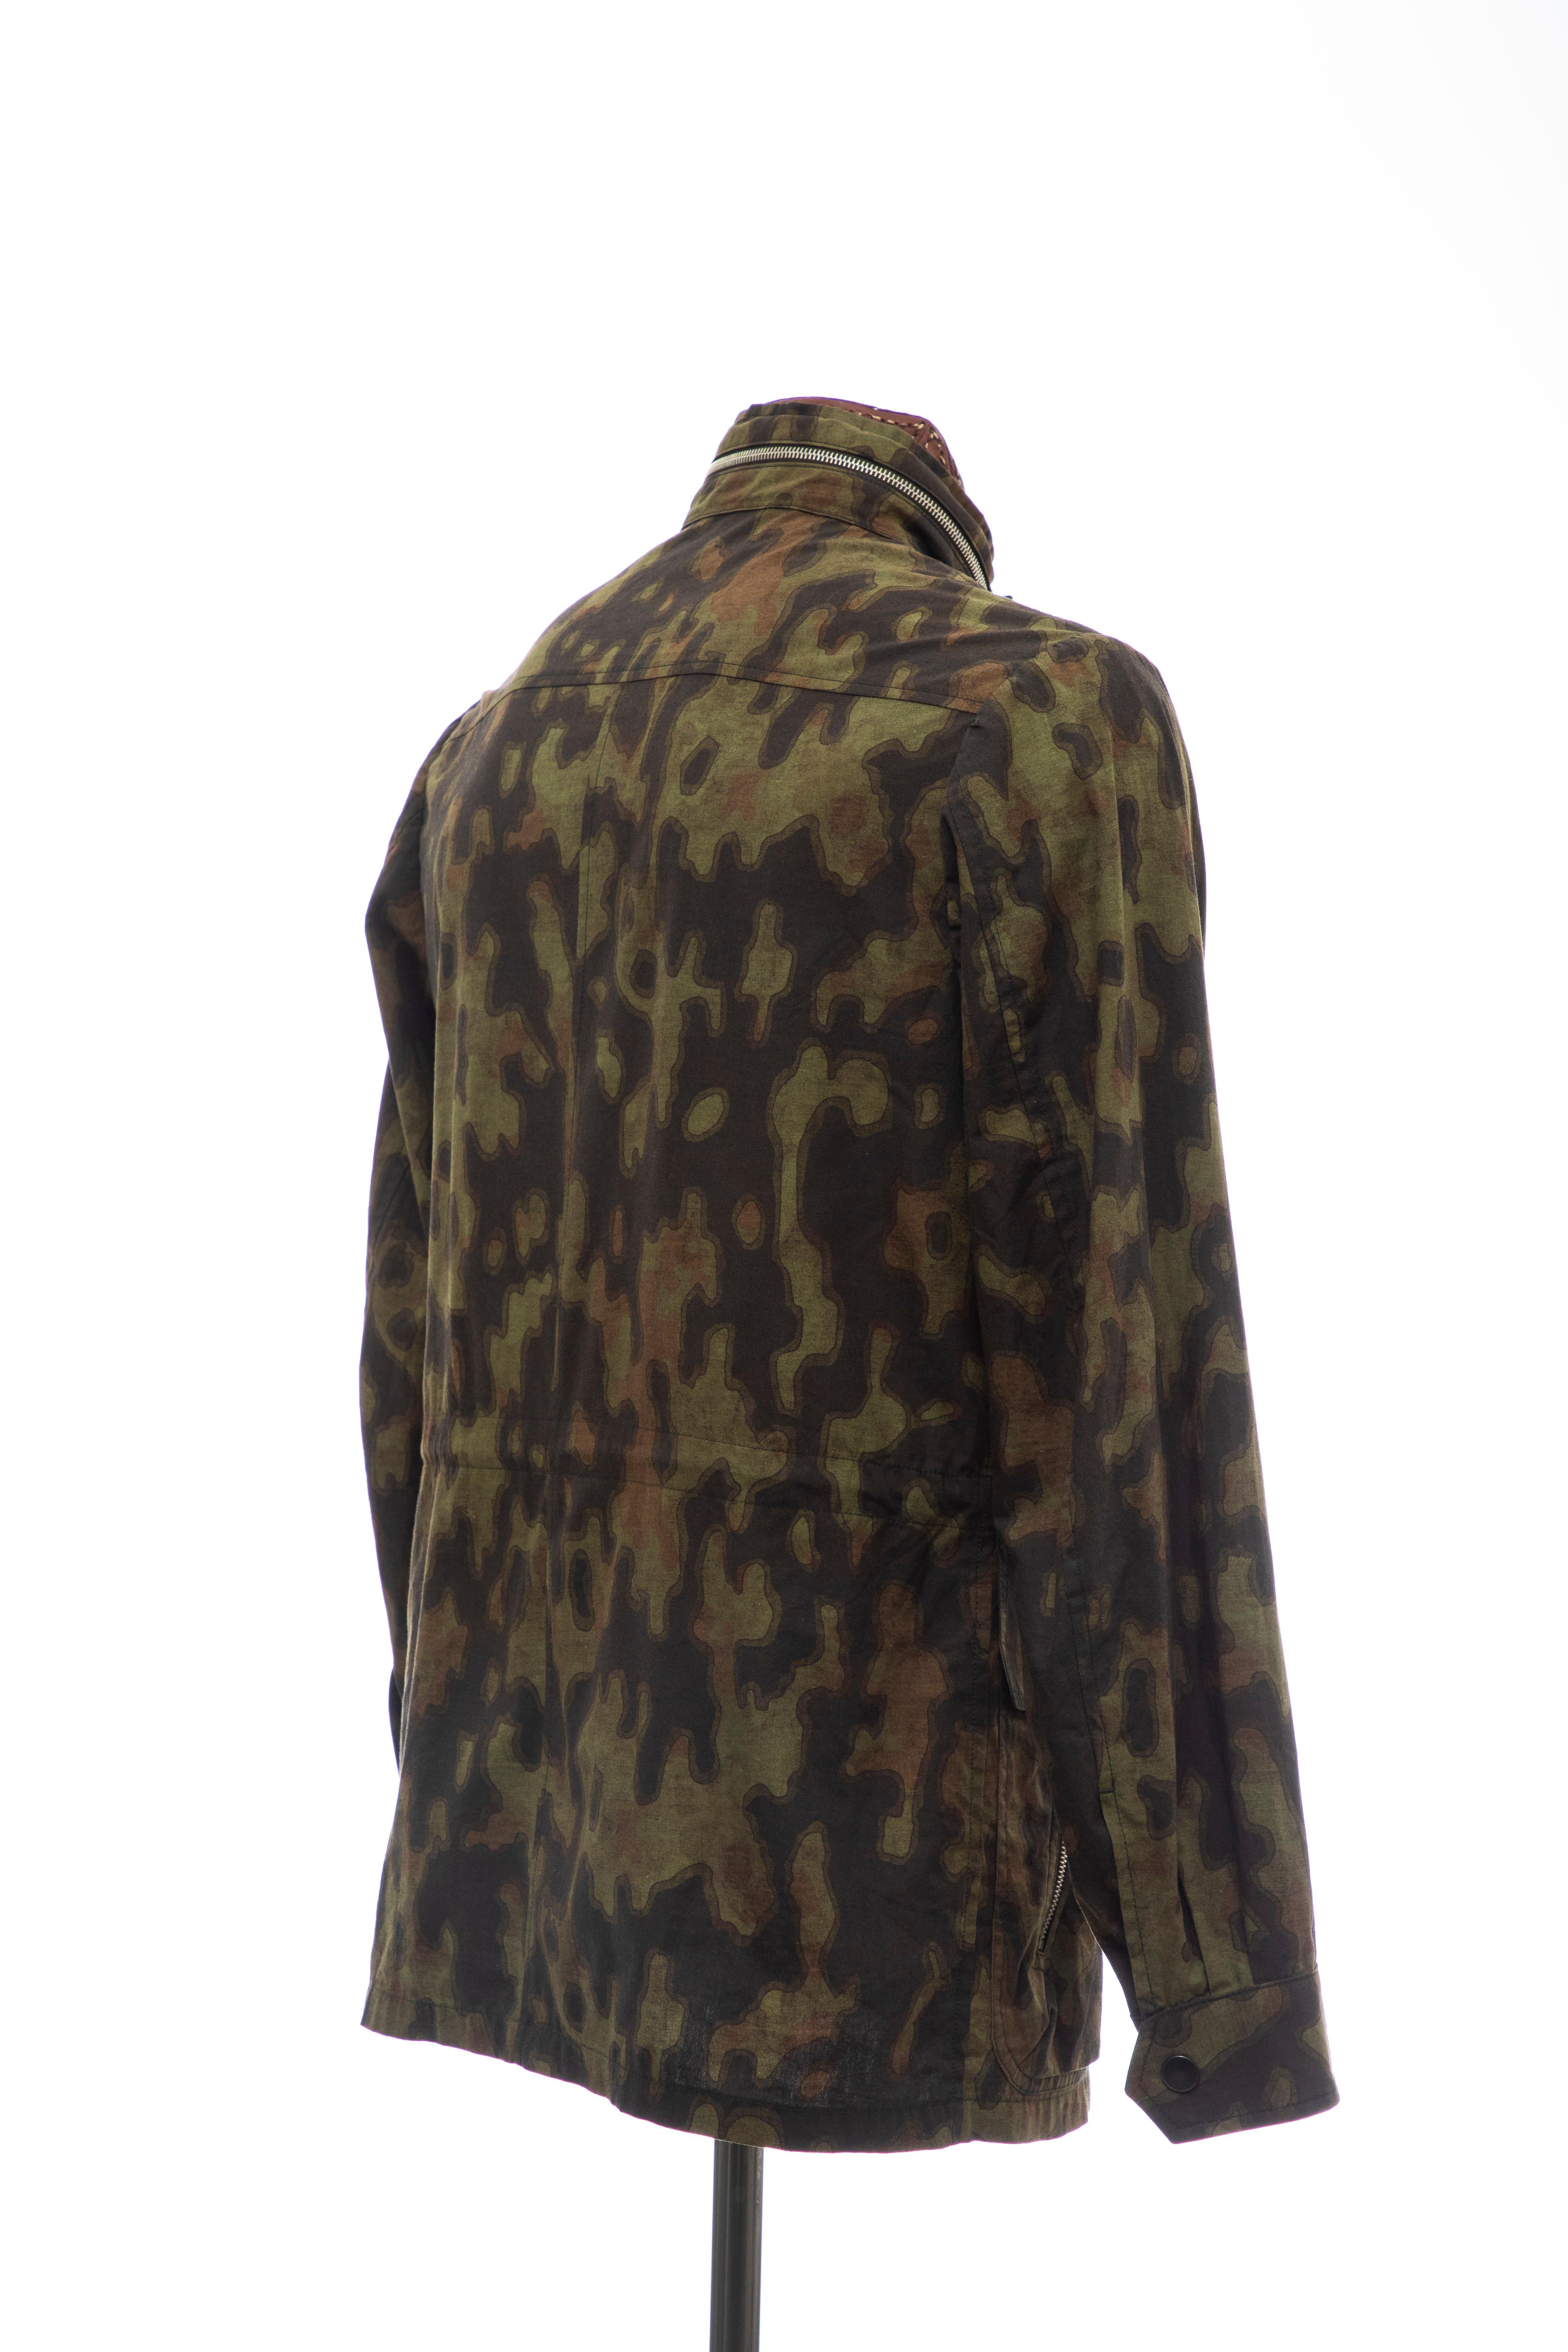 Black Dries Van Noten Men's Cotton Camouflage Jacket, Spring 2013 For Sale